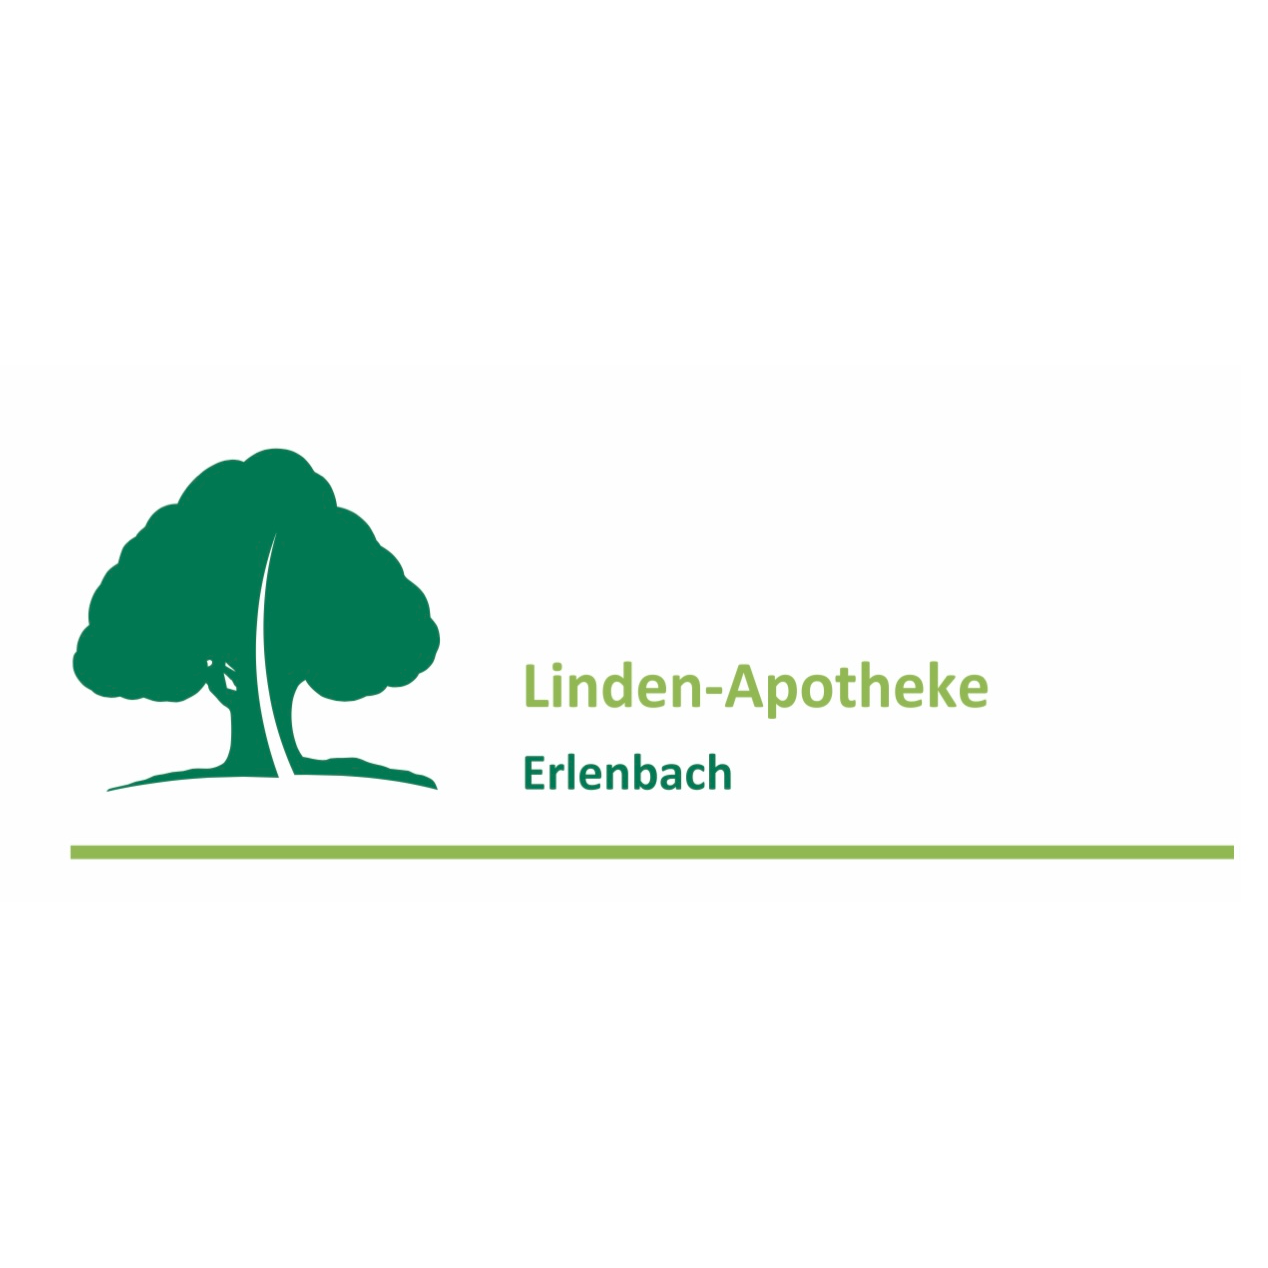 Linden-Apotheke in Erlenbach am Main - Logo